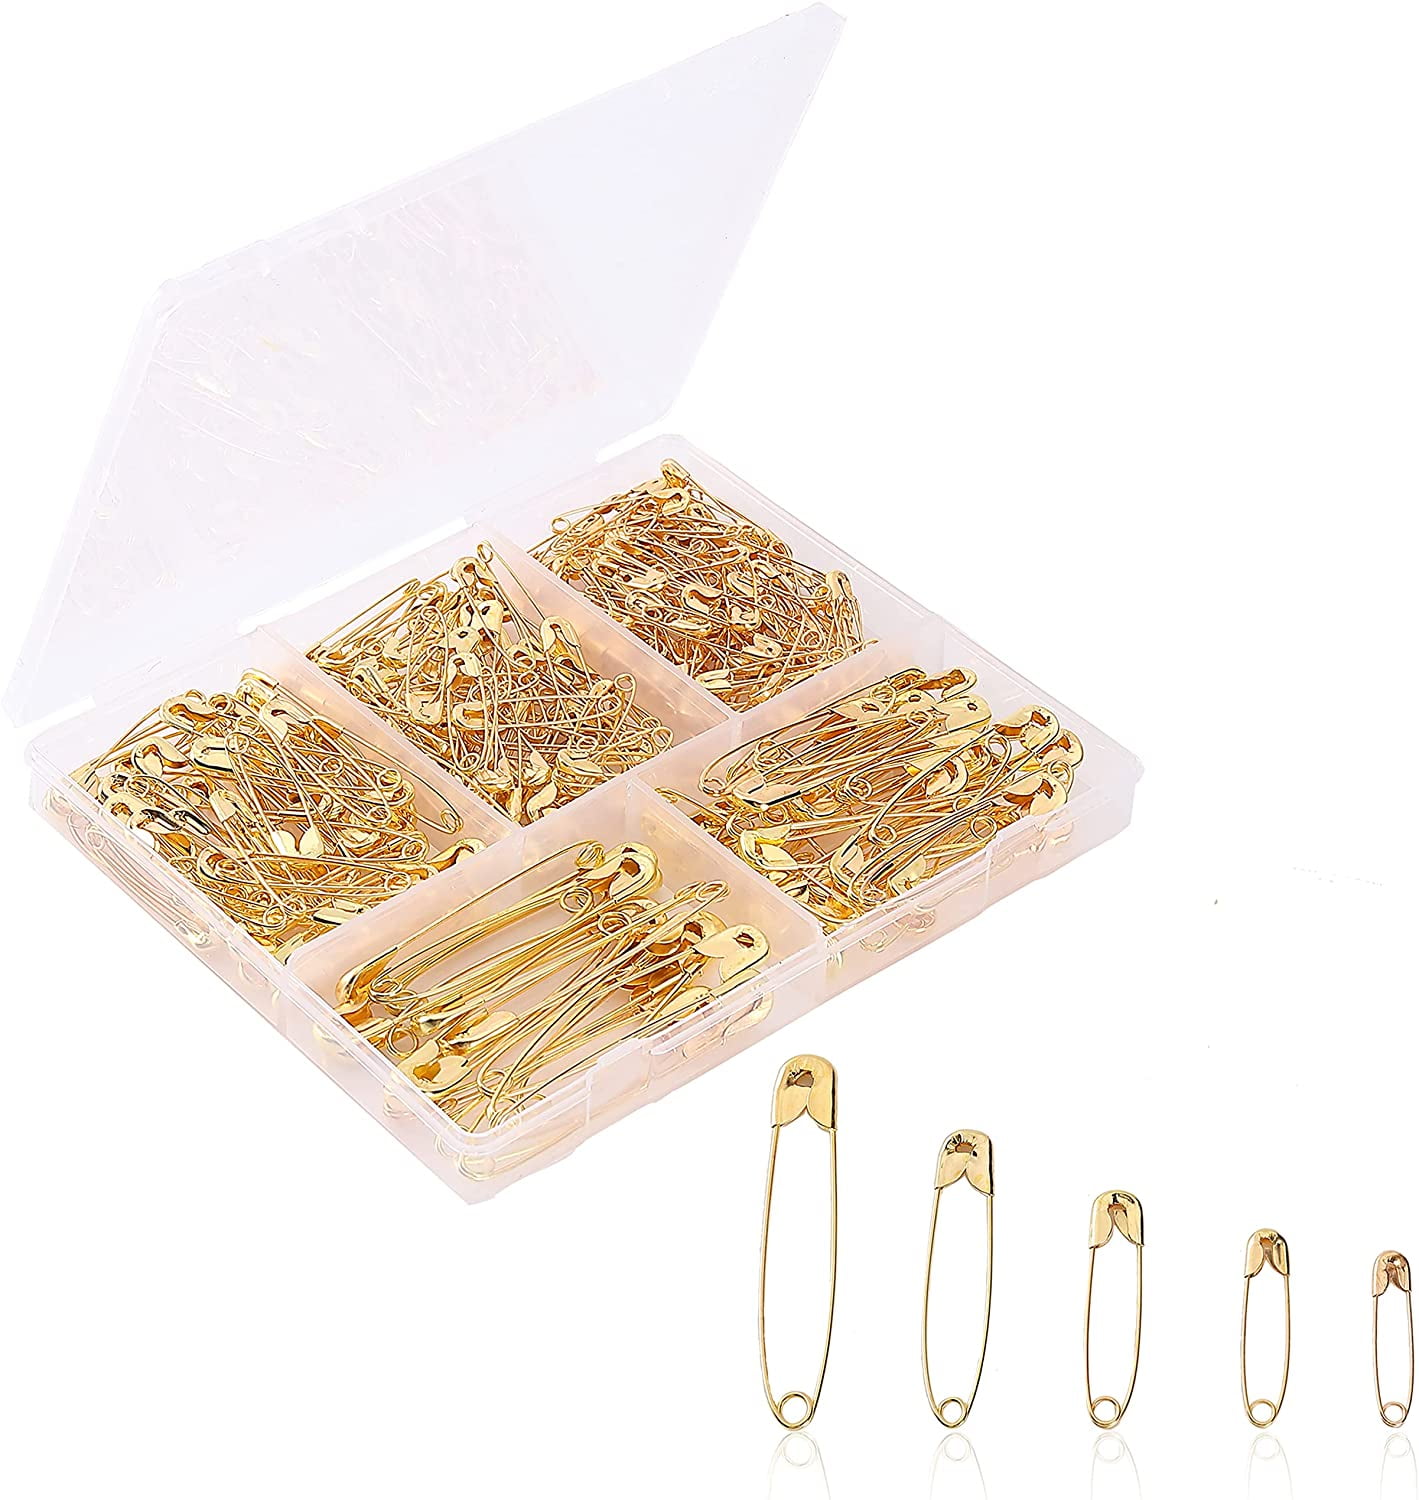 20 x Gilt Golden Gold Sewing Small Safety Pins - Art Craft Sew